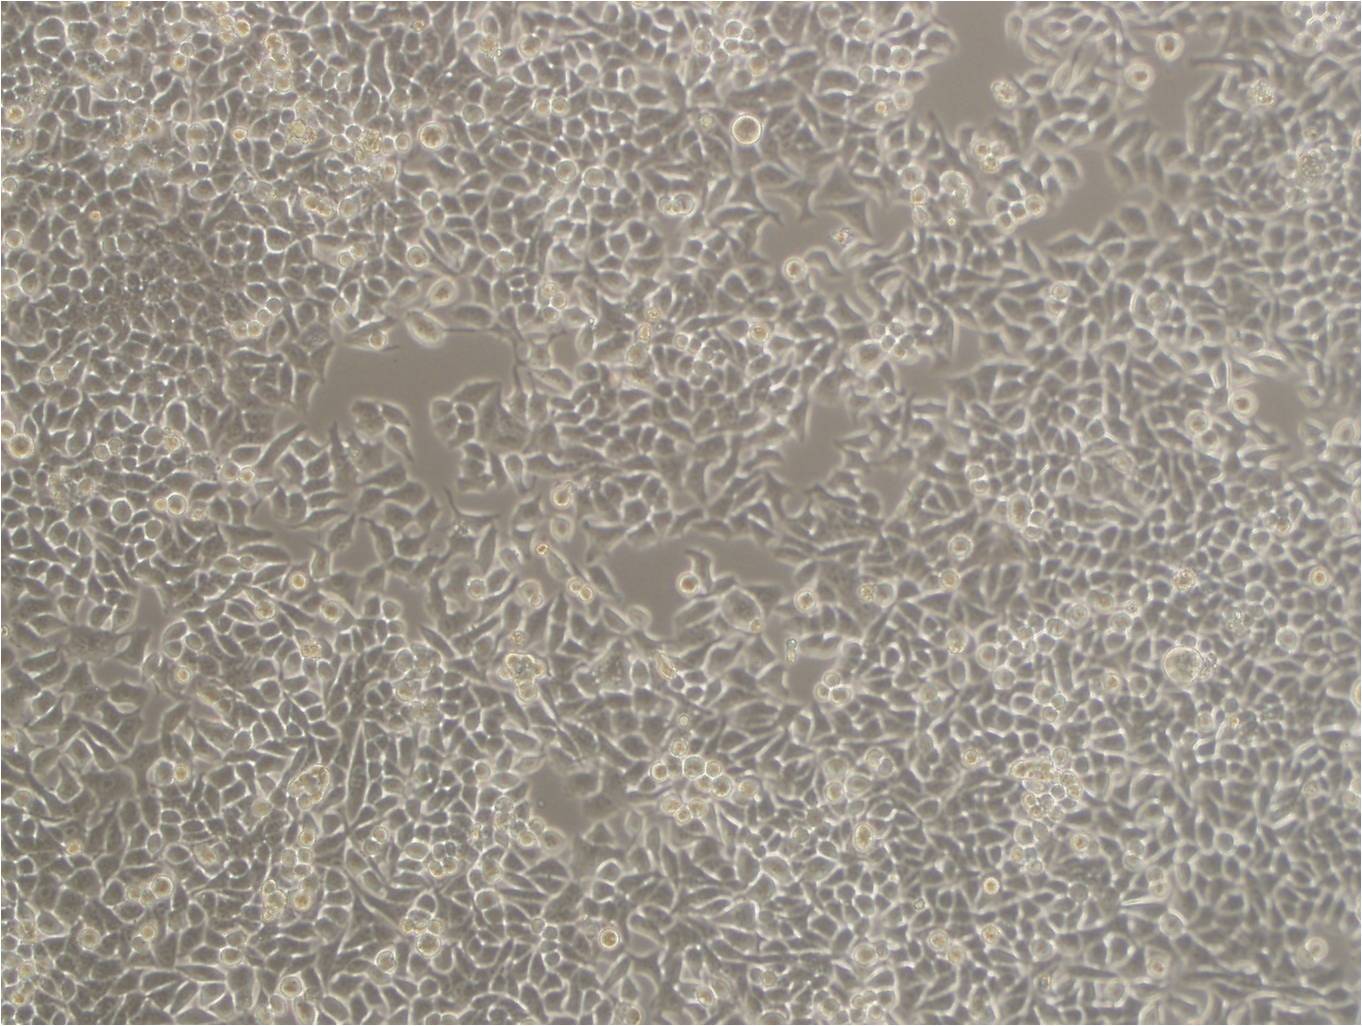 ID8 Cells|小鼠卵巢癌细胞系